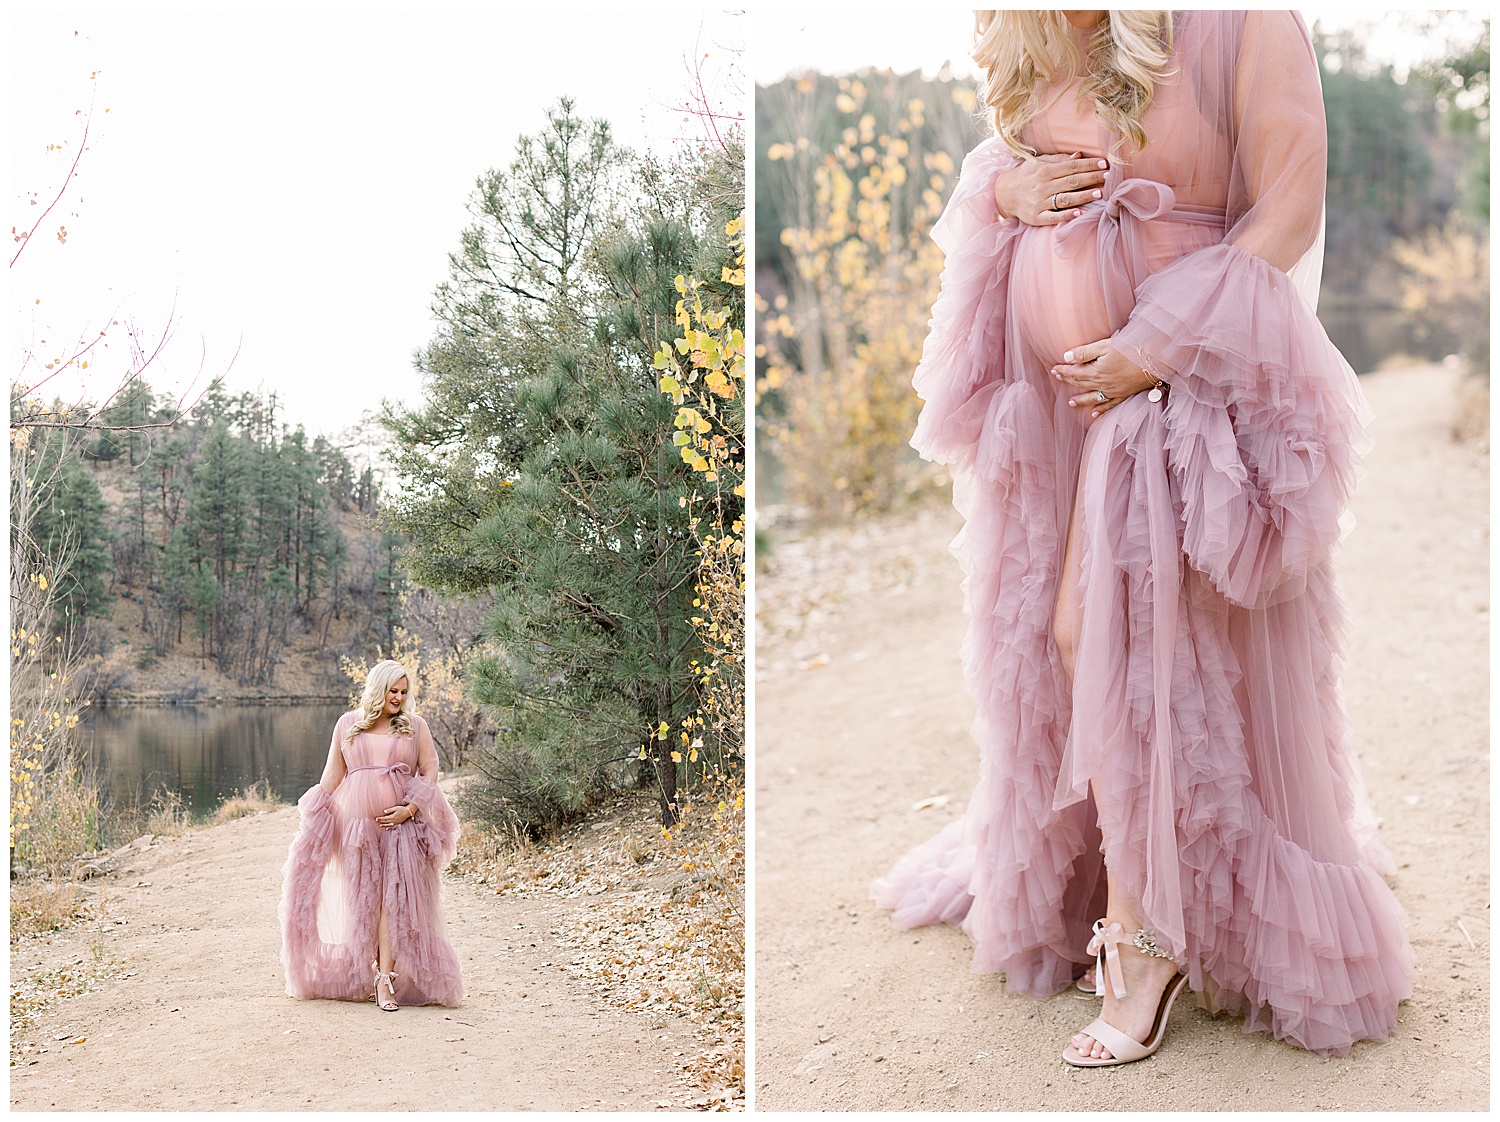 Maternity Session in Prescott Arizona, blush colored desert gown